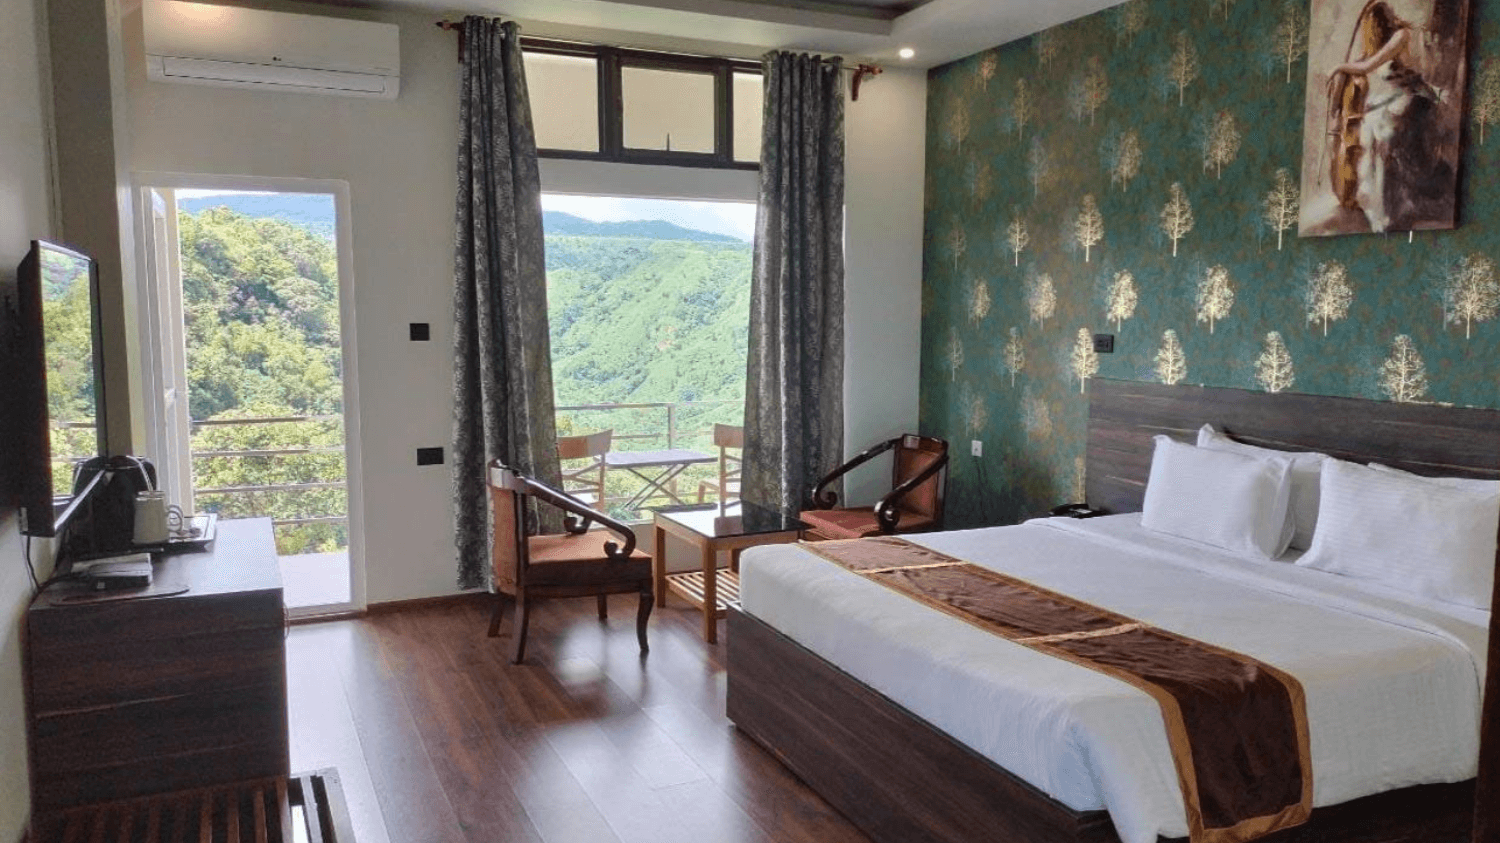 Ka Bri War Resort, Nongstoin, Meghalaya, India